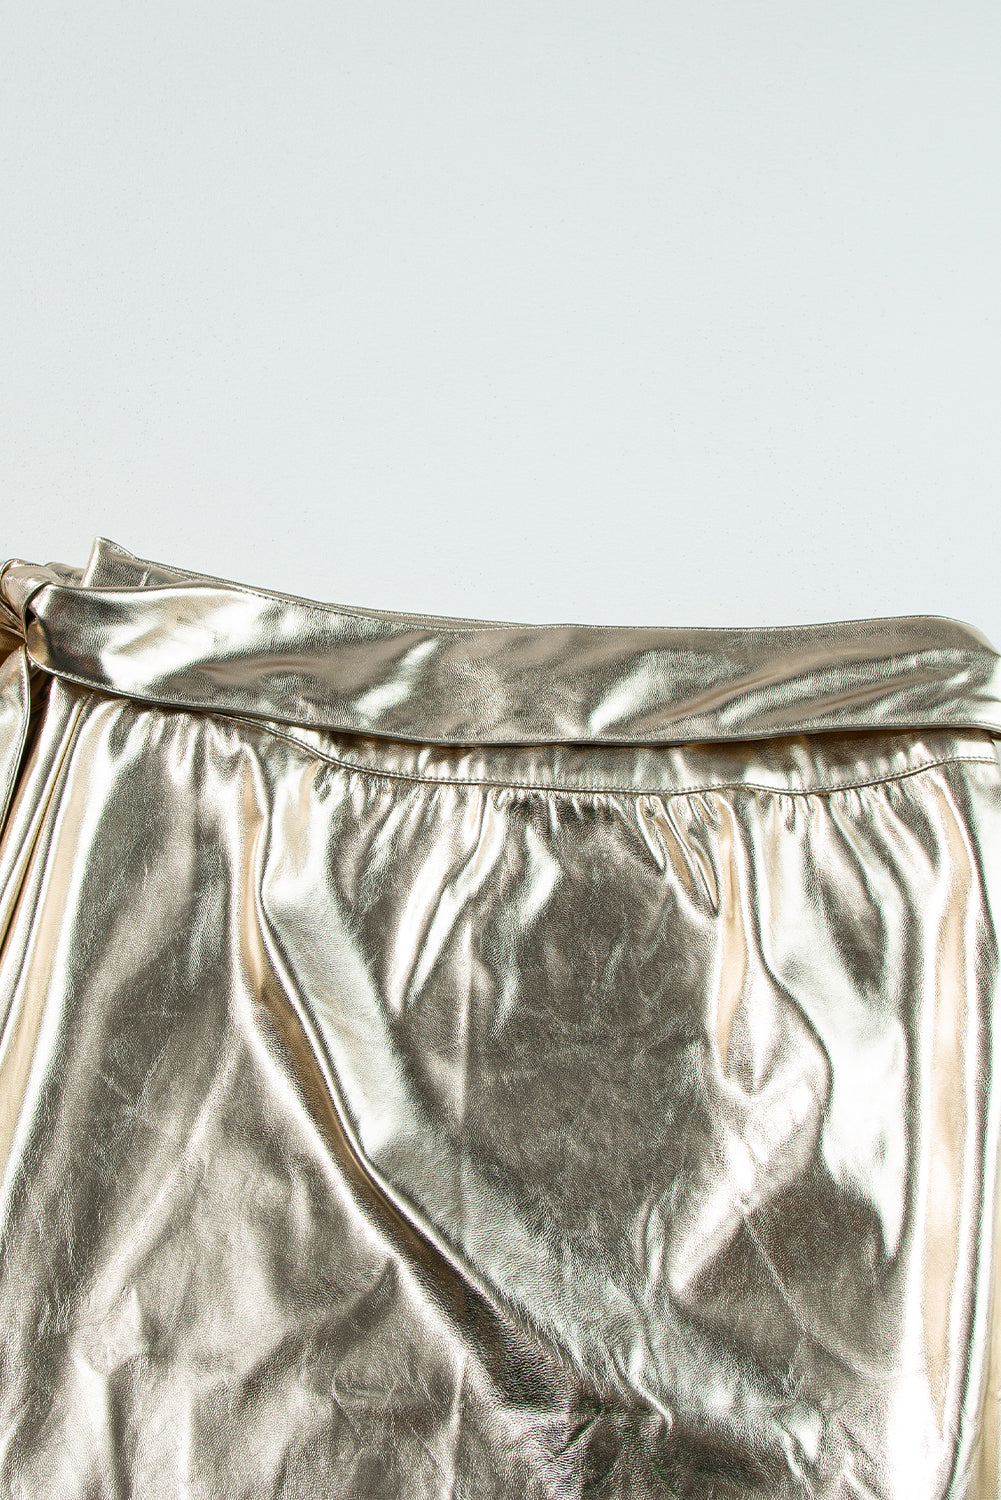 Gold Knotted Metallic Midi Skirt